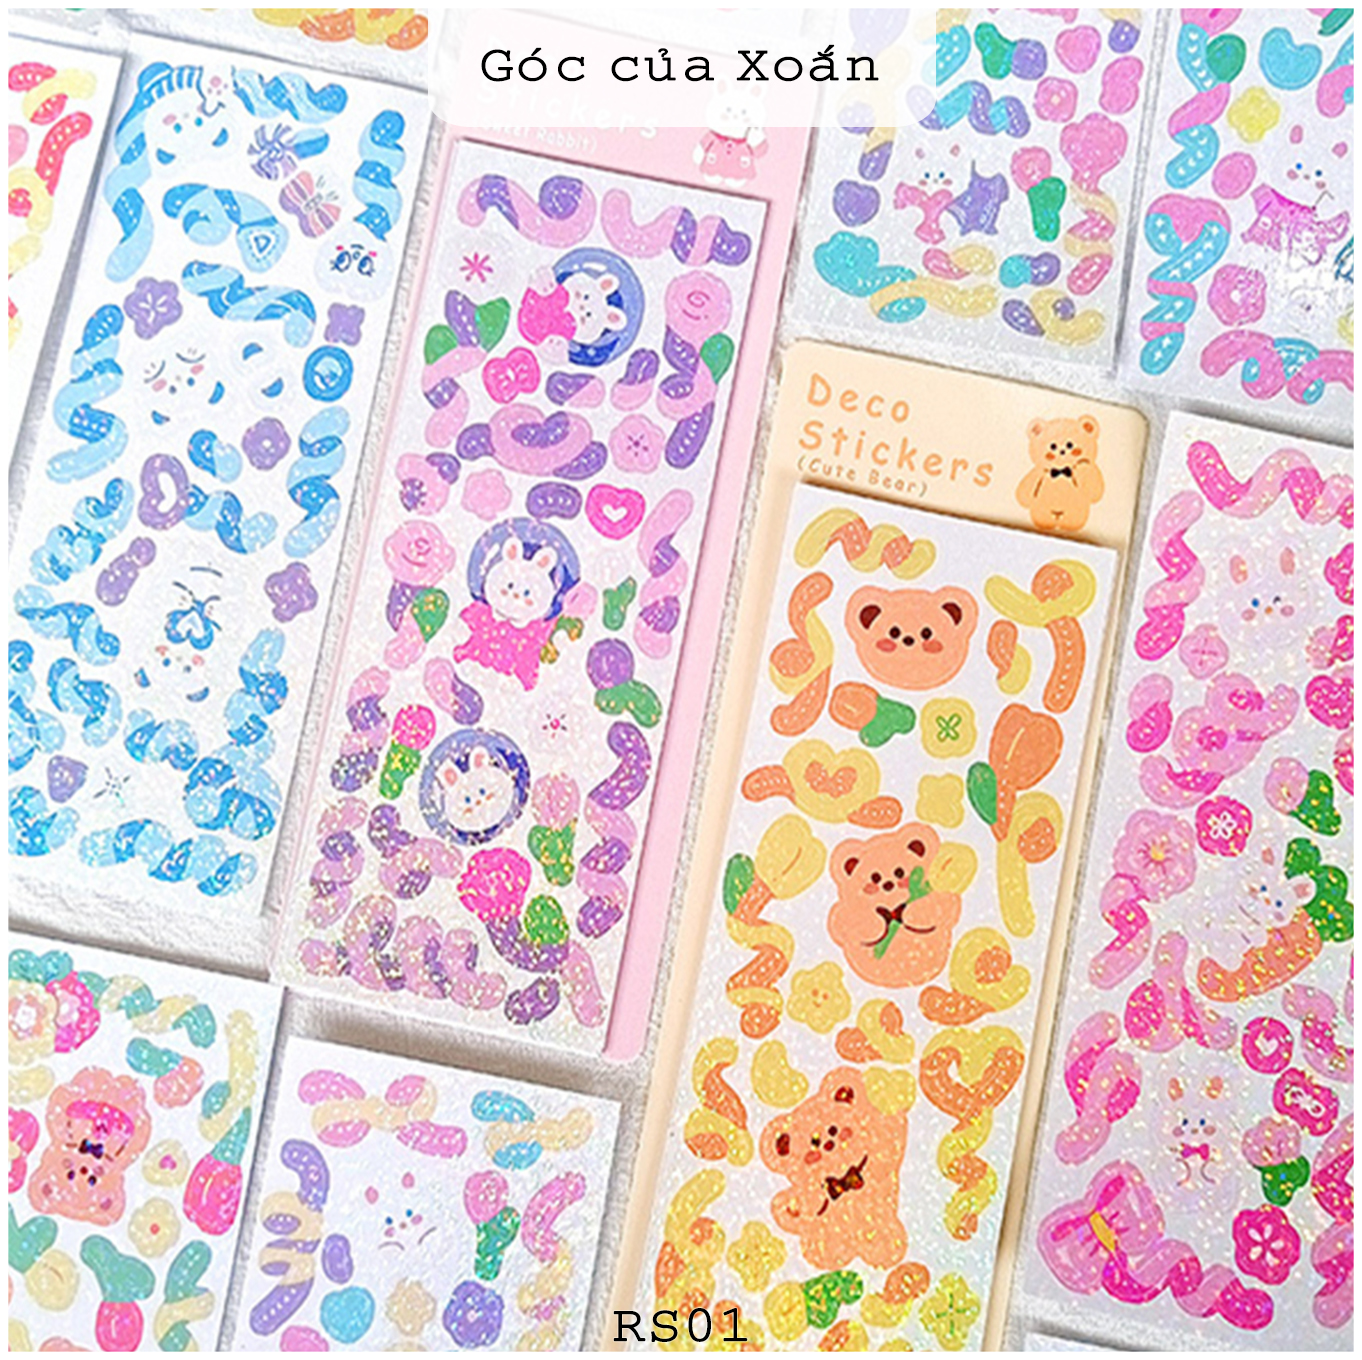 Set 6 sheets stickers ribbon sparkling lovely Goc cua Xoan